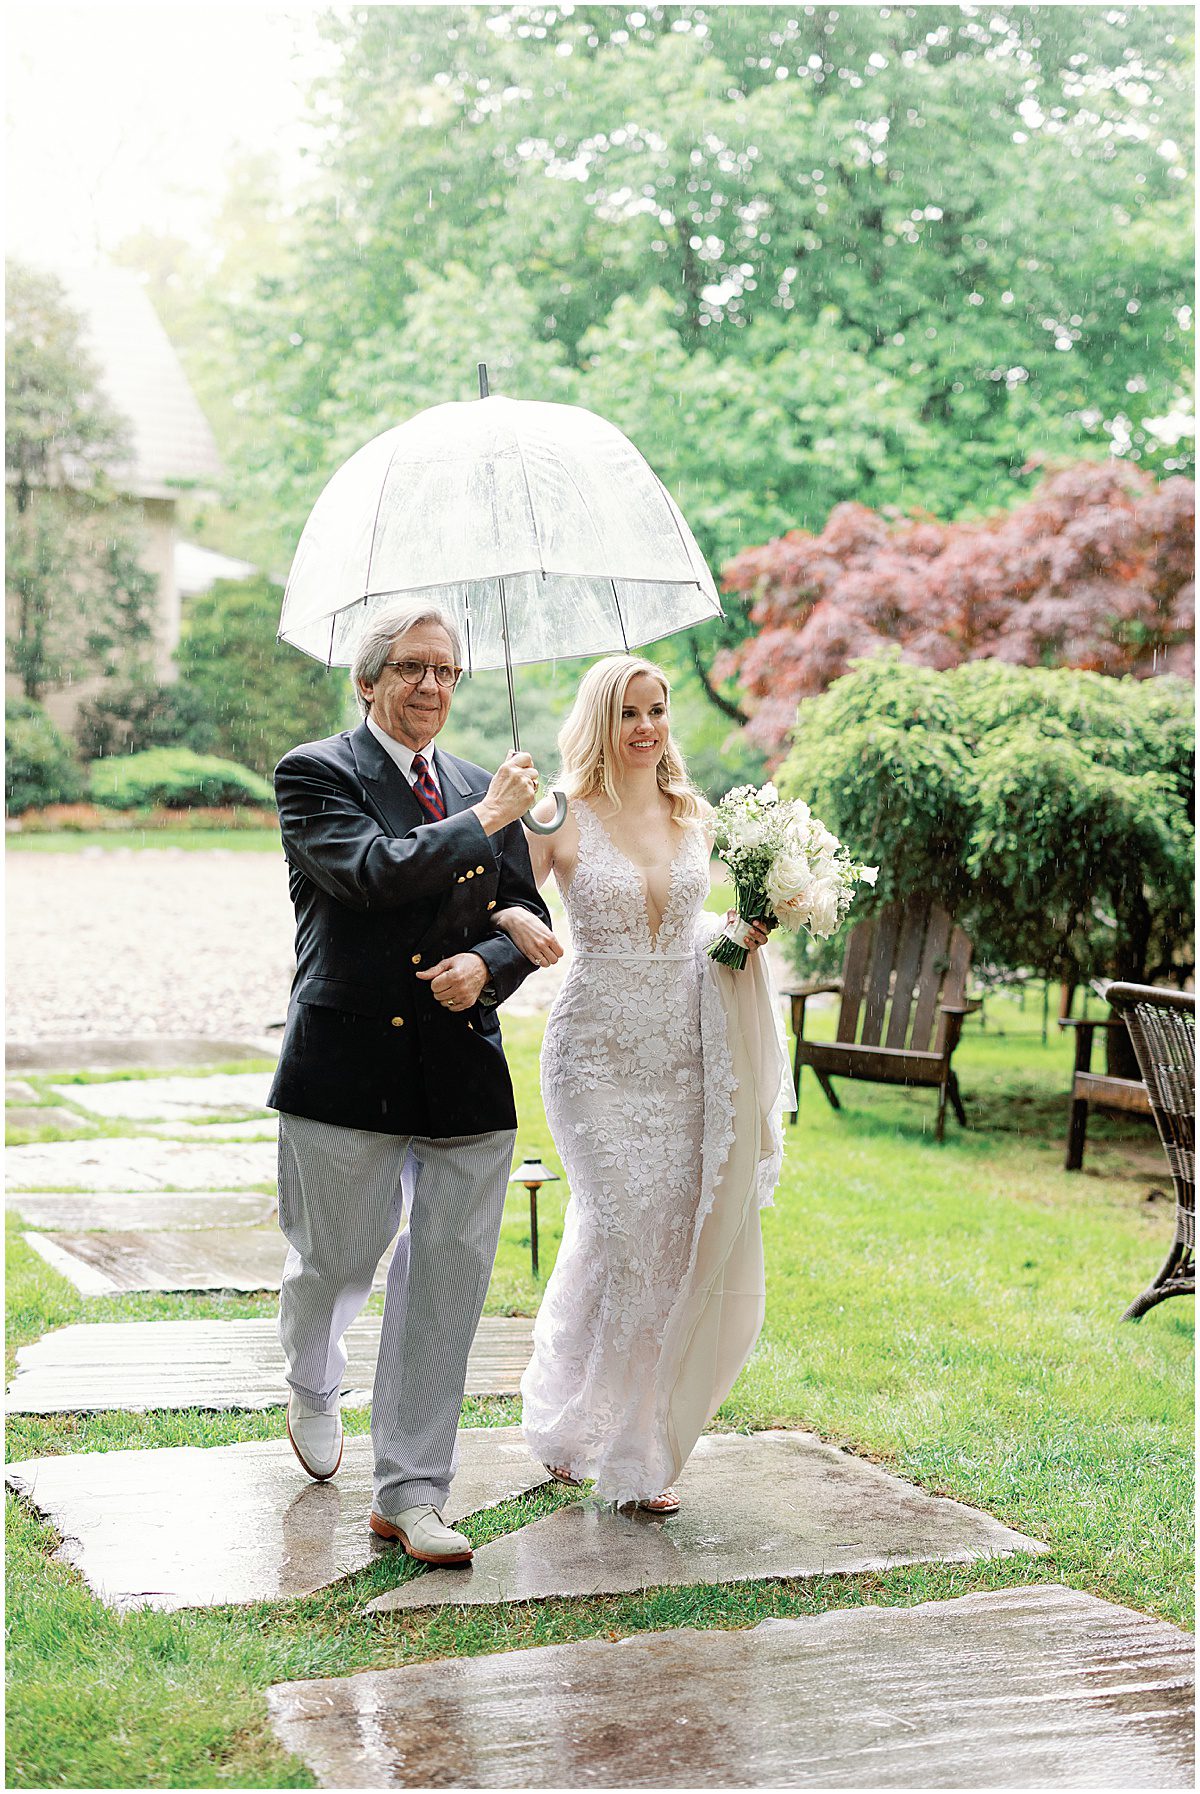 Father of the Bride Walking Bride in The Rain Photo